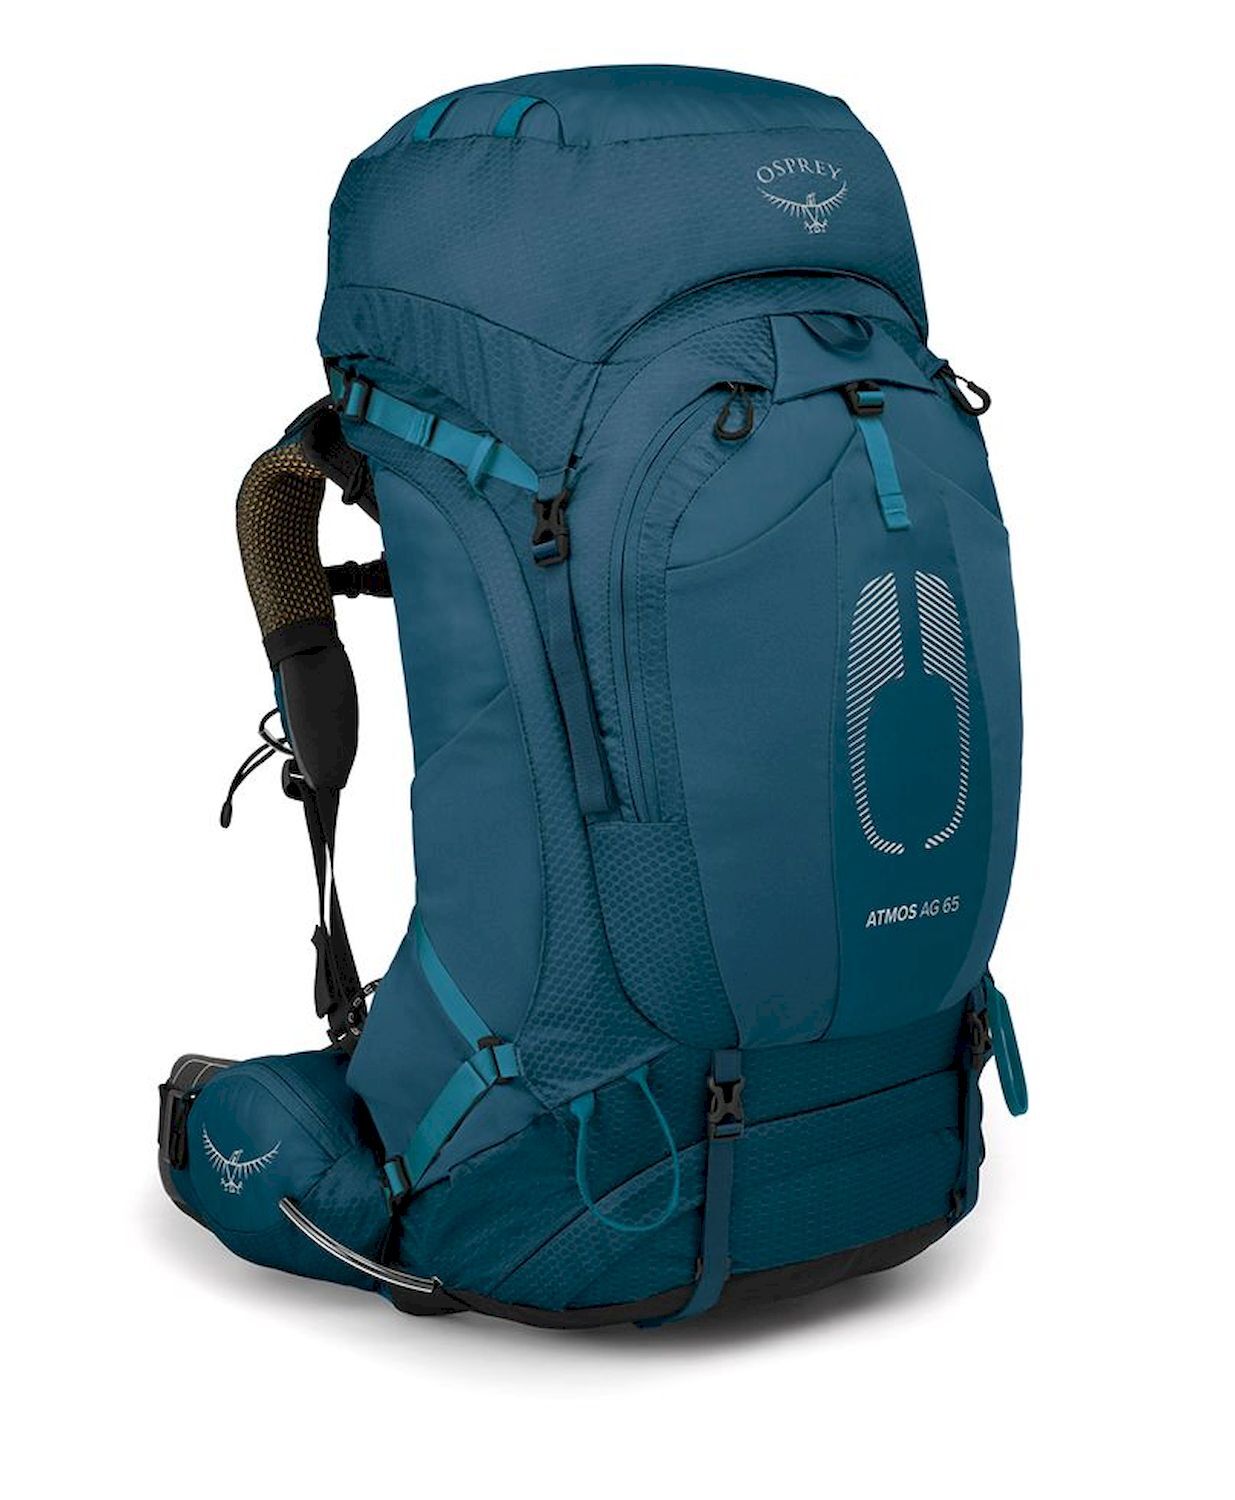 Osprey Atmos AG 65 - Hiking backpack - Men's